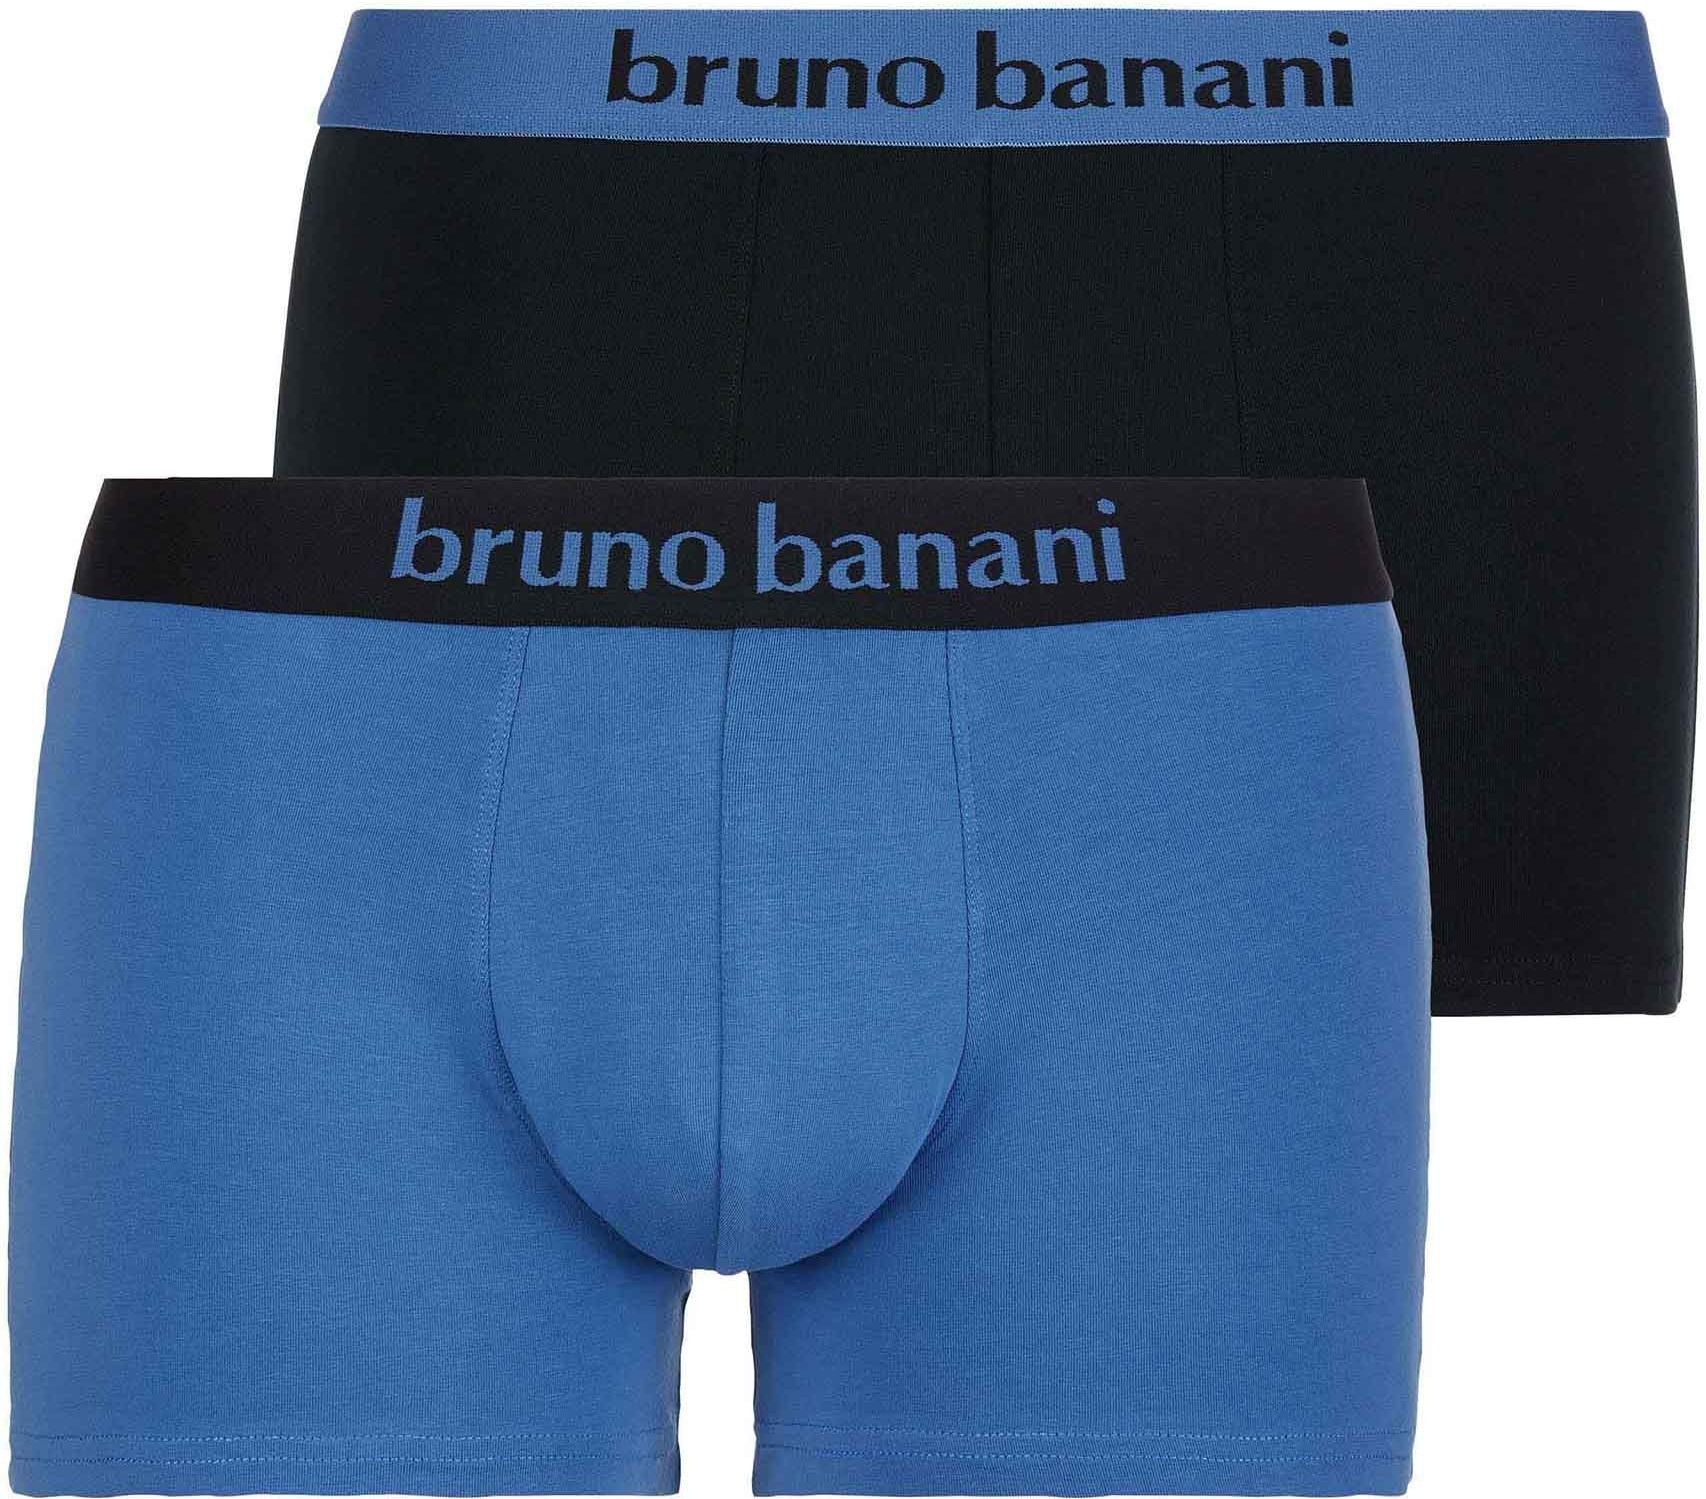 bruno banani short pack